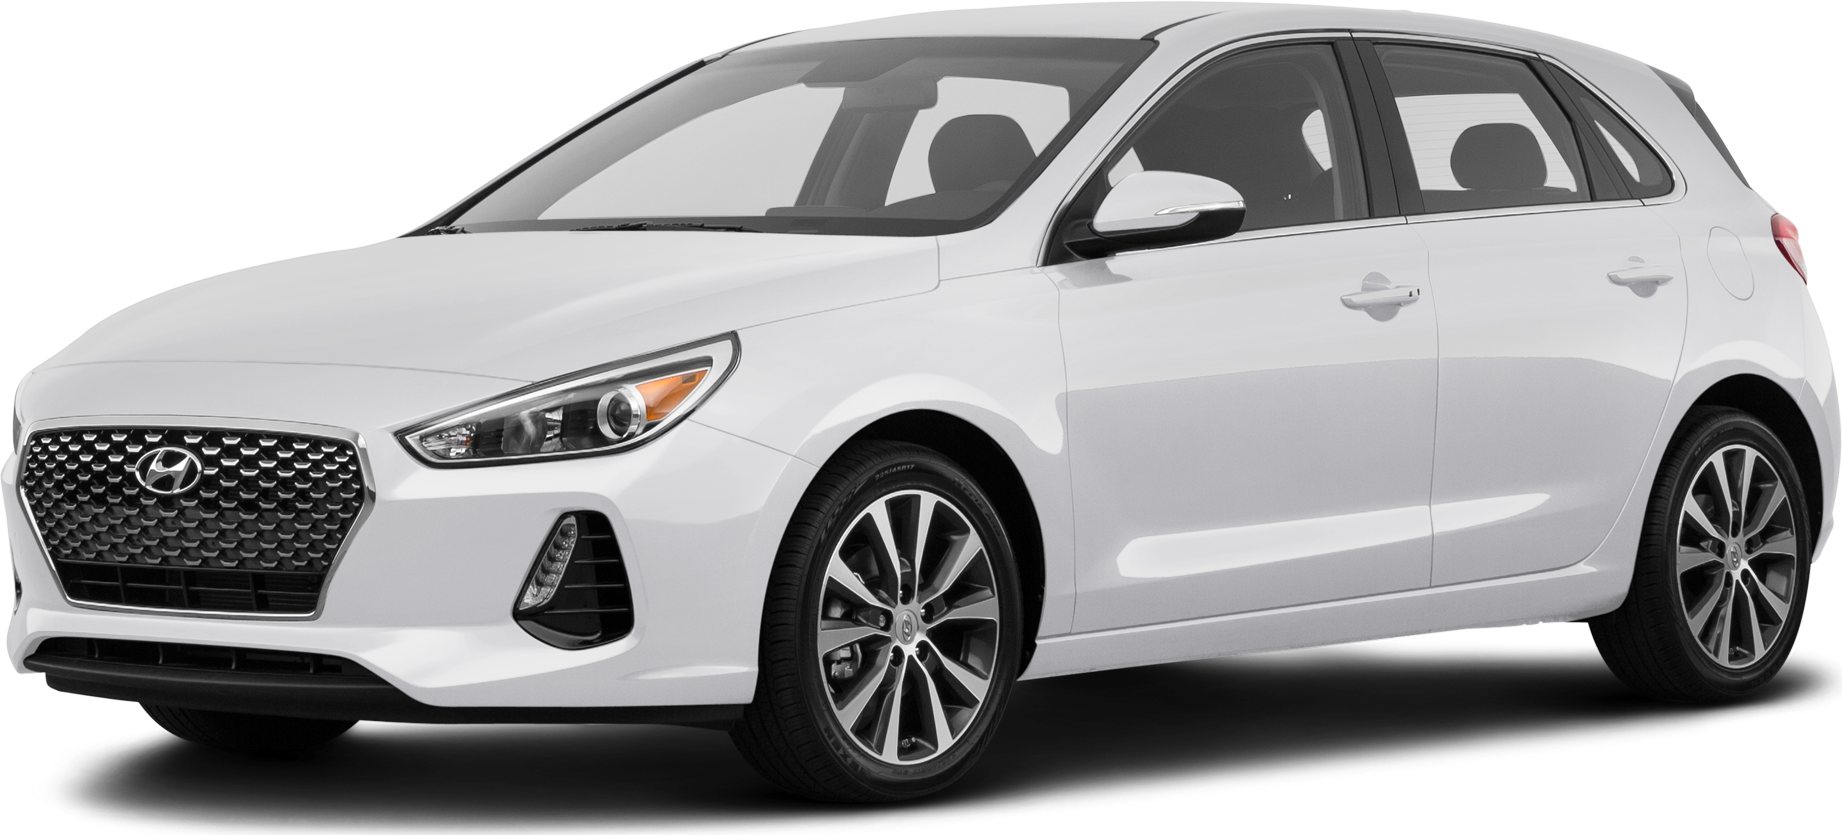 2018 Hyundai Elantra GT Price, Value, Ratings & Reviews | Kelley